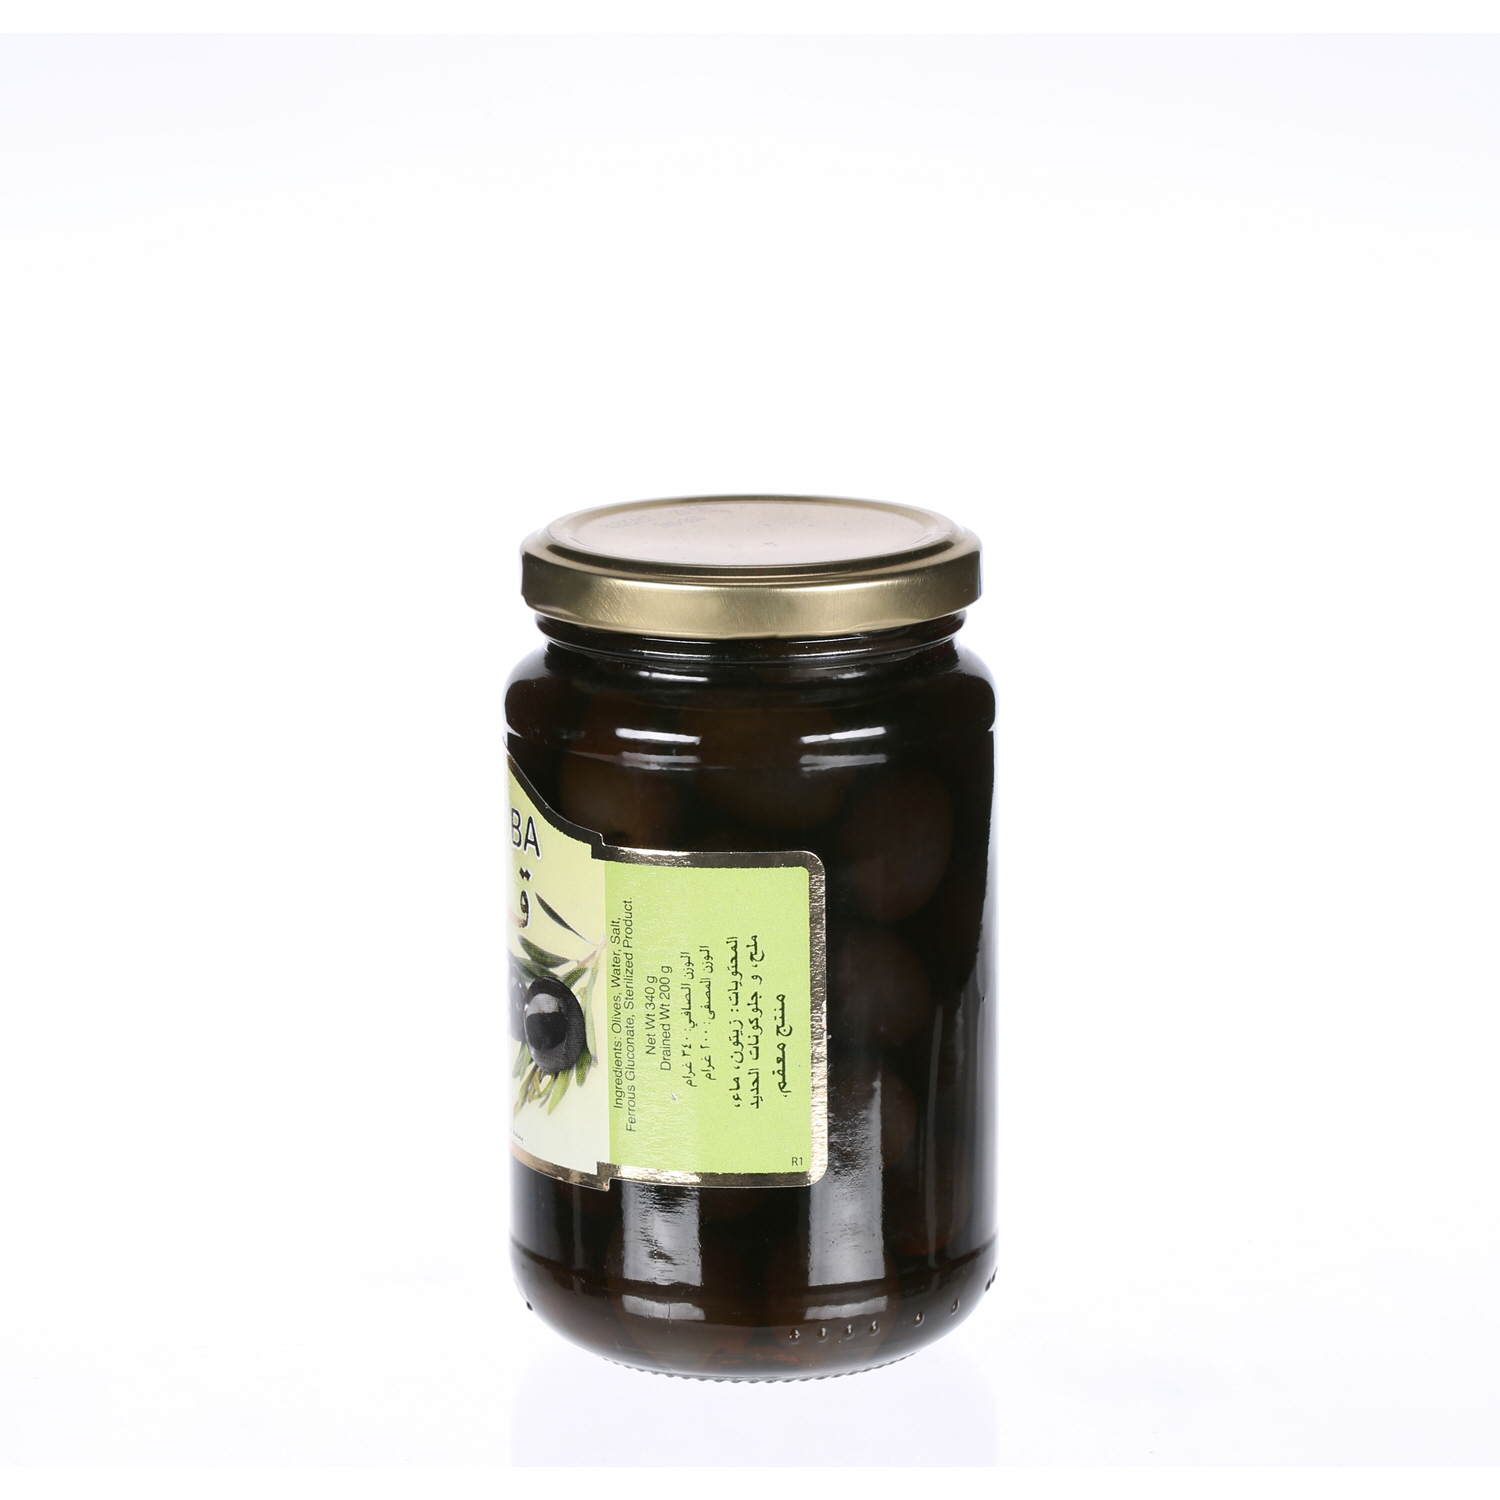 Cordoba Olives Plain Black 200 g